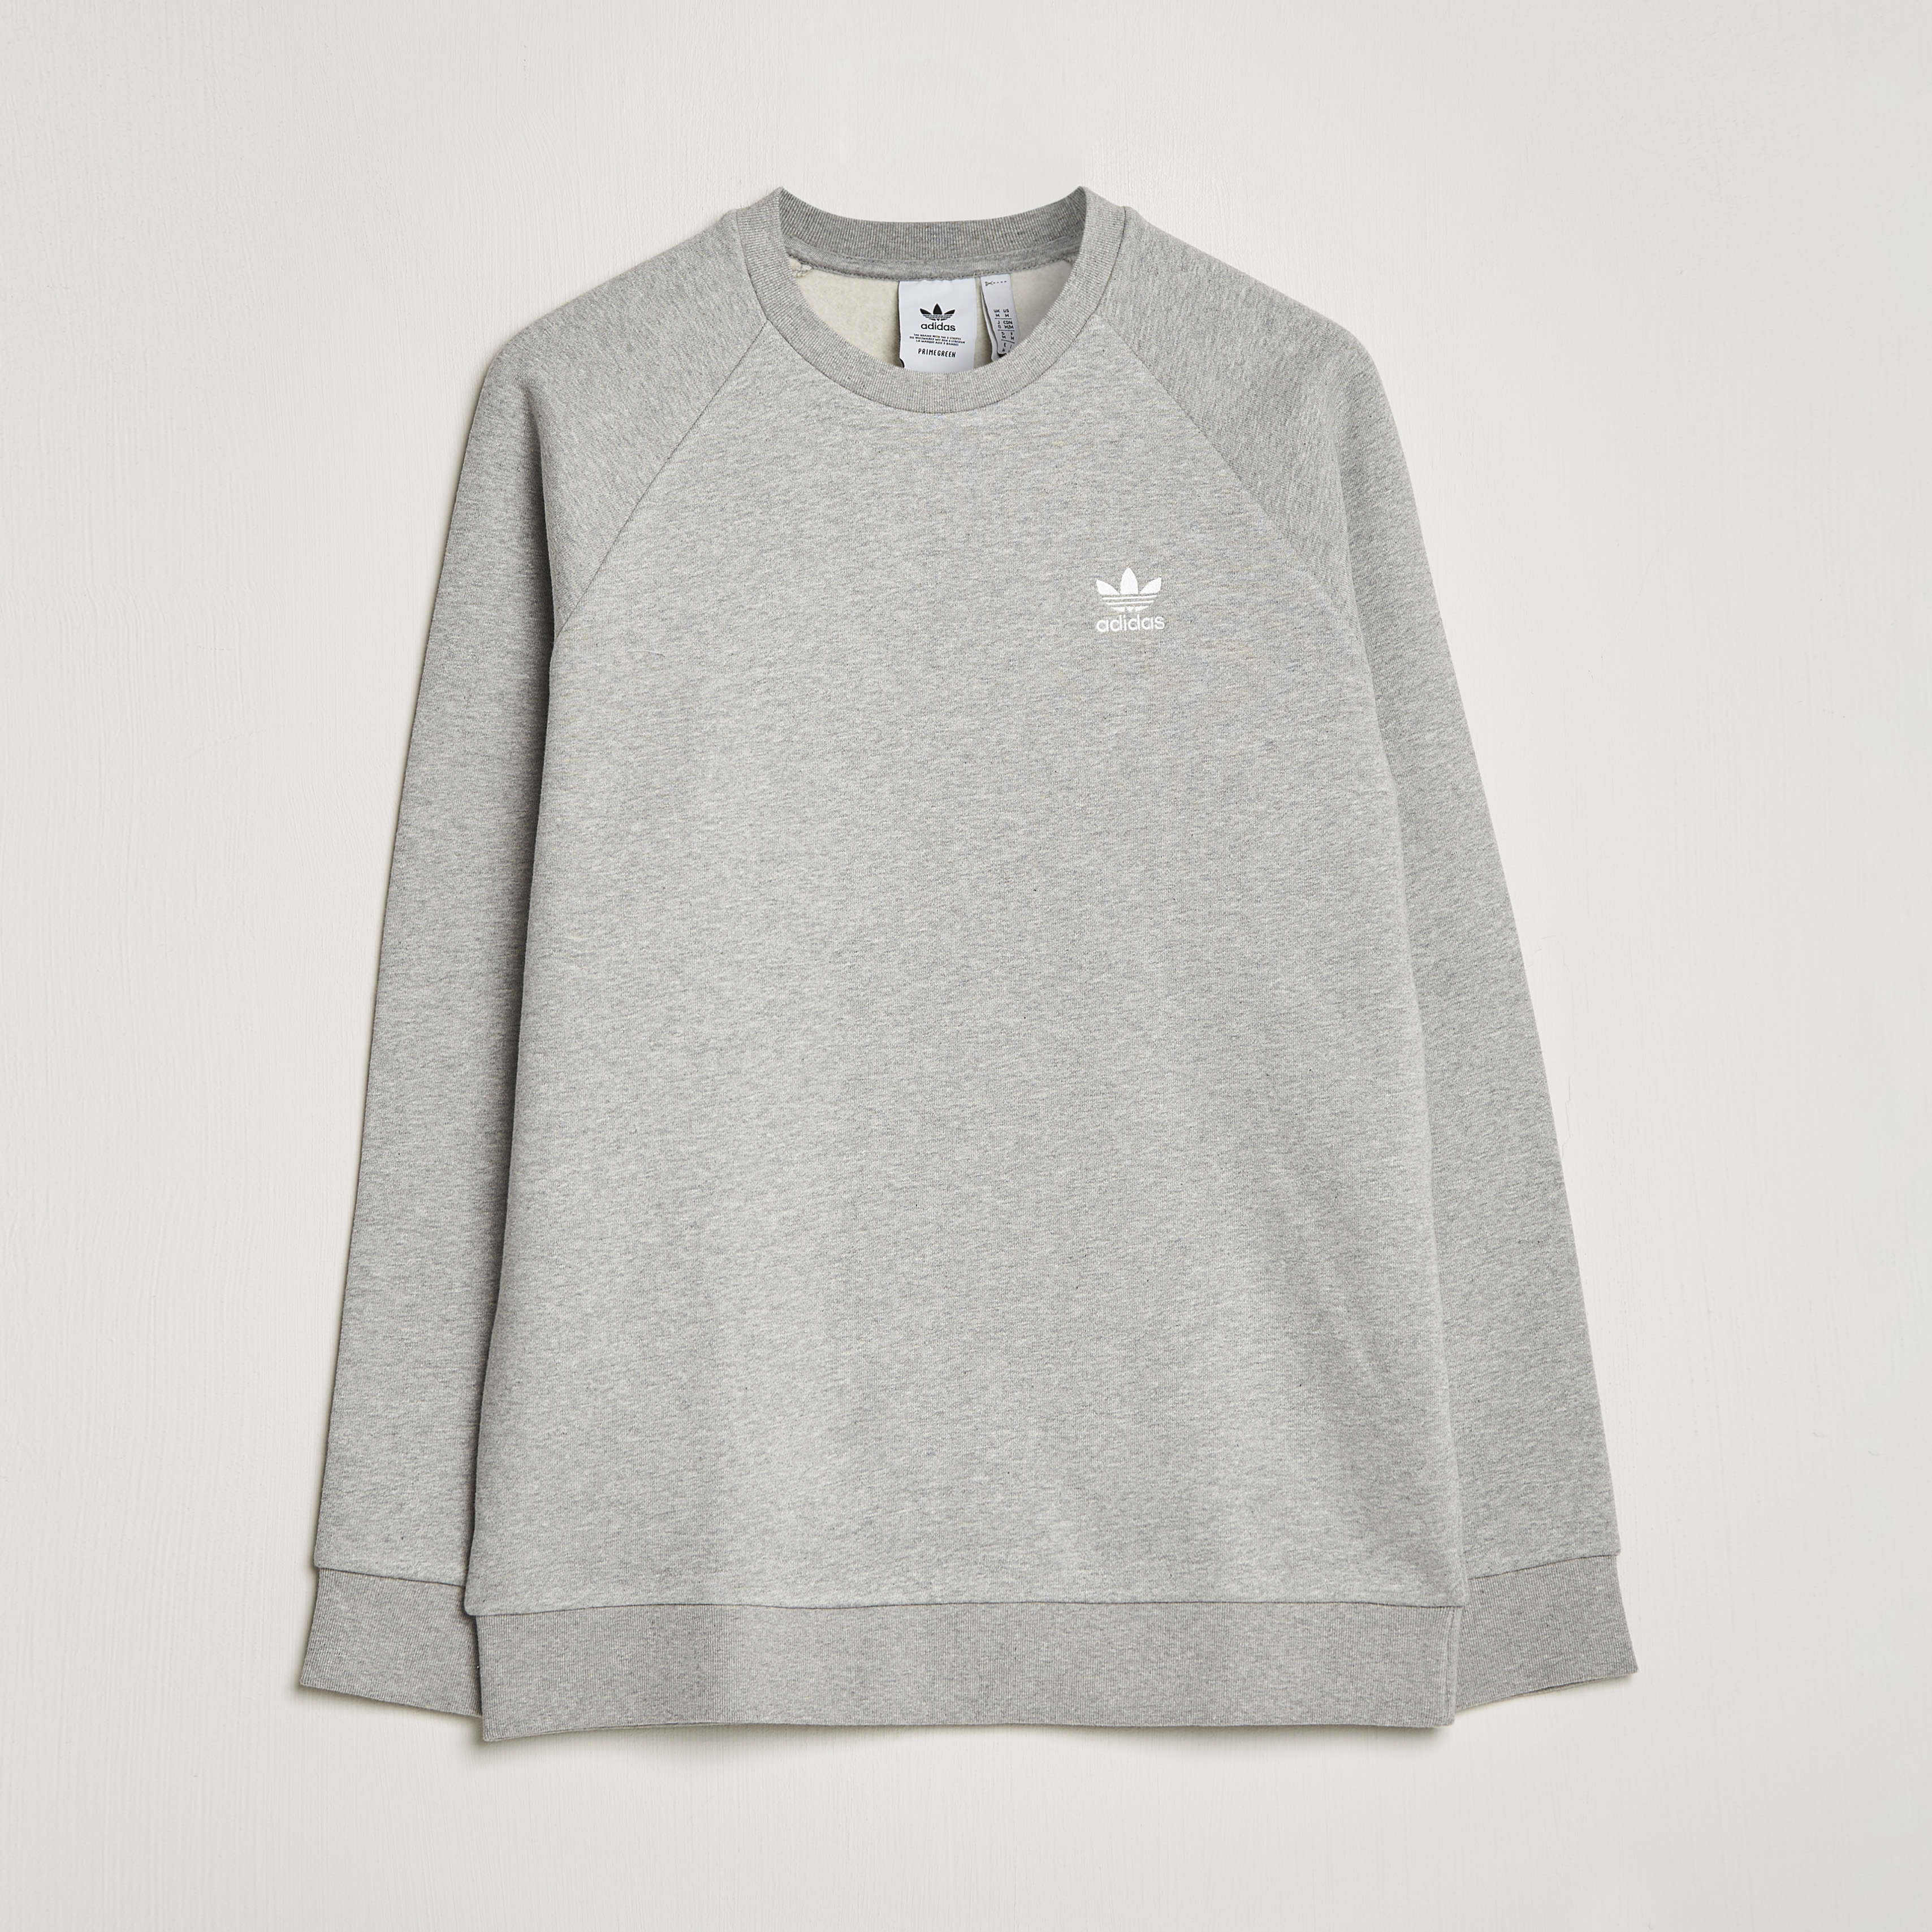 adidas Originals Essential Trefoil Sweatshirt Grey at